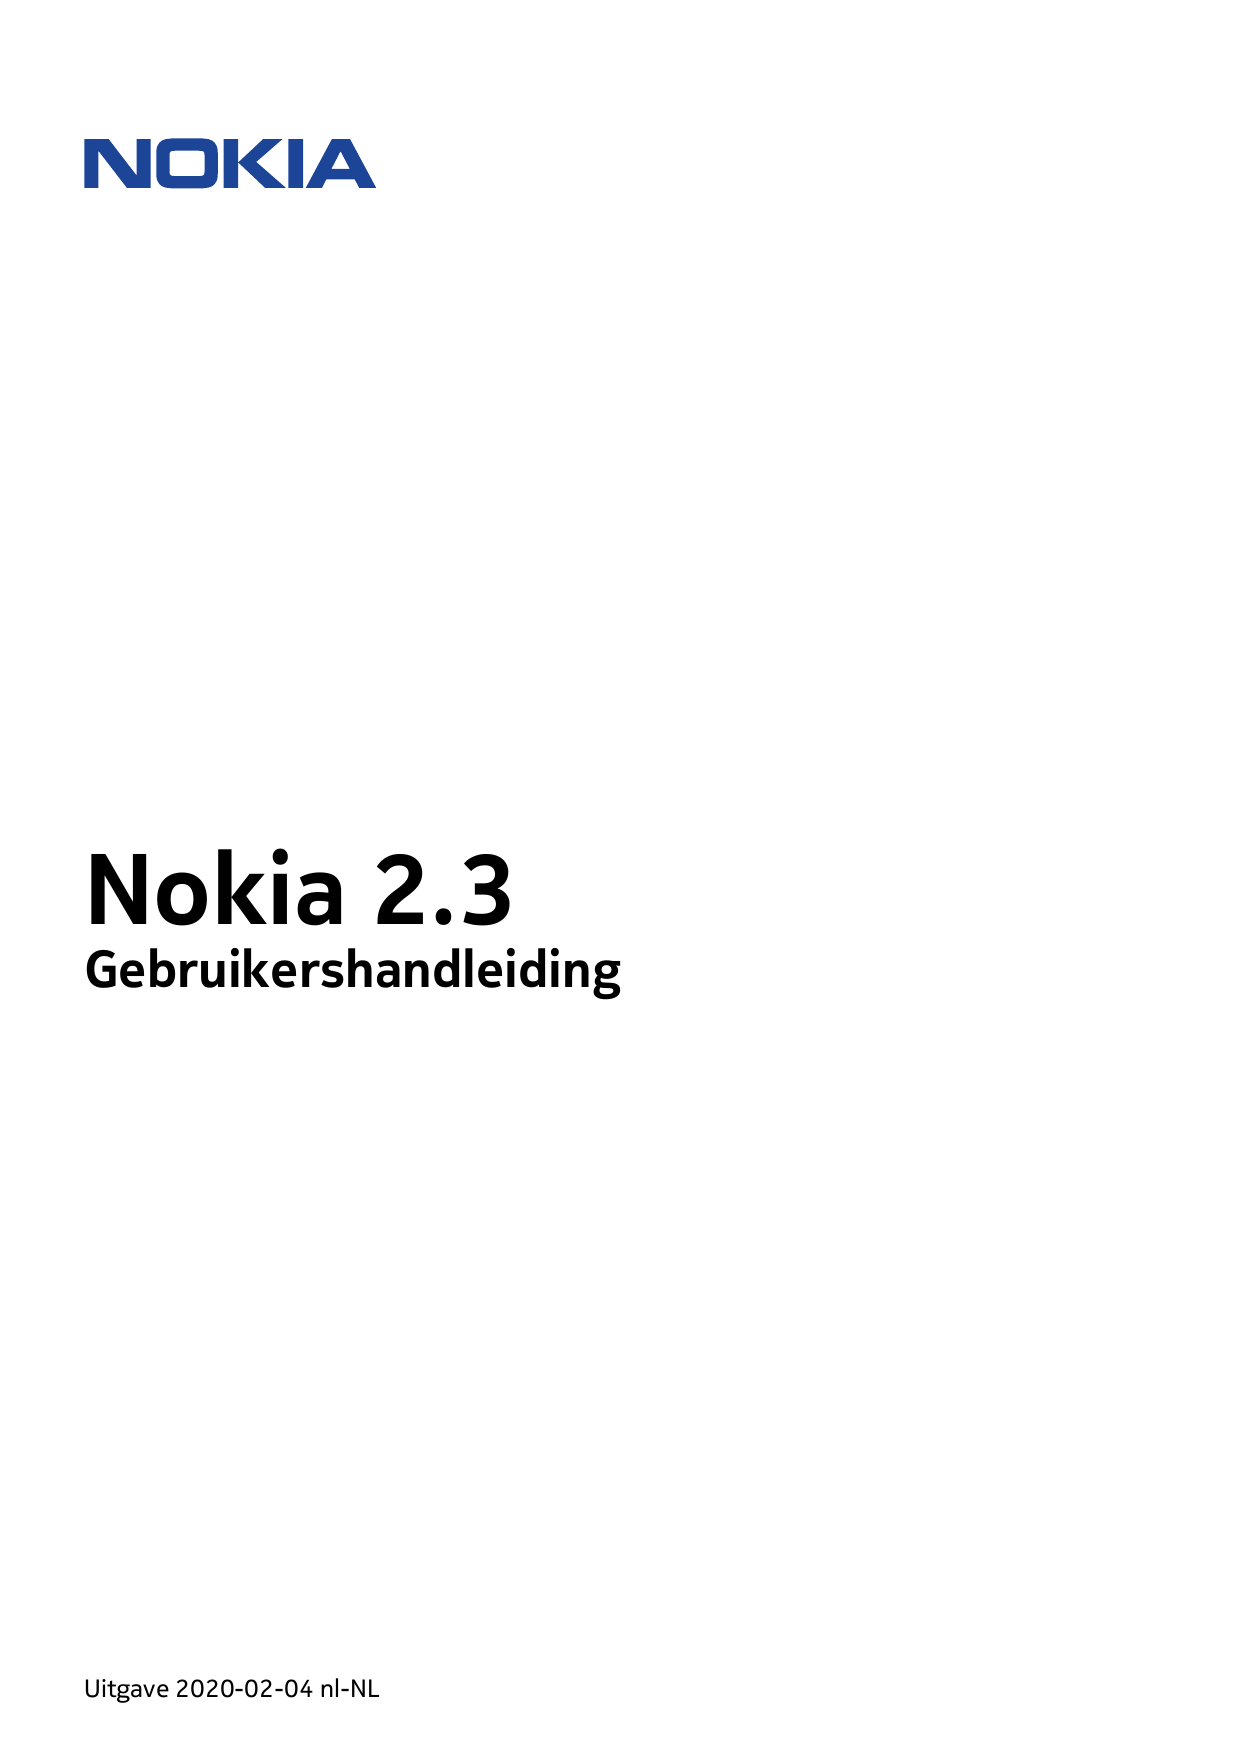 Nokia 2.3GebruikershandleidingUitgave 2020-02-04 nl-NL